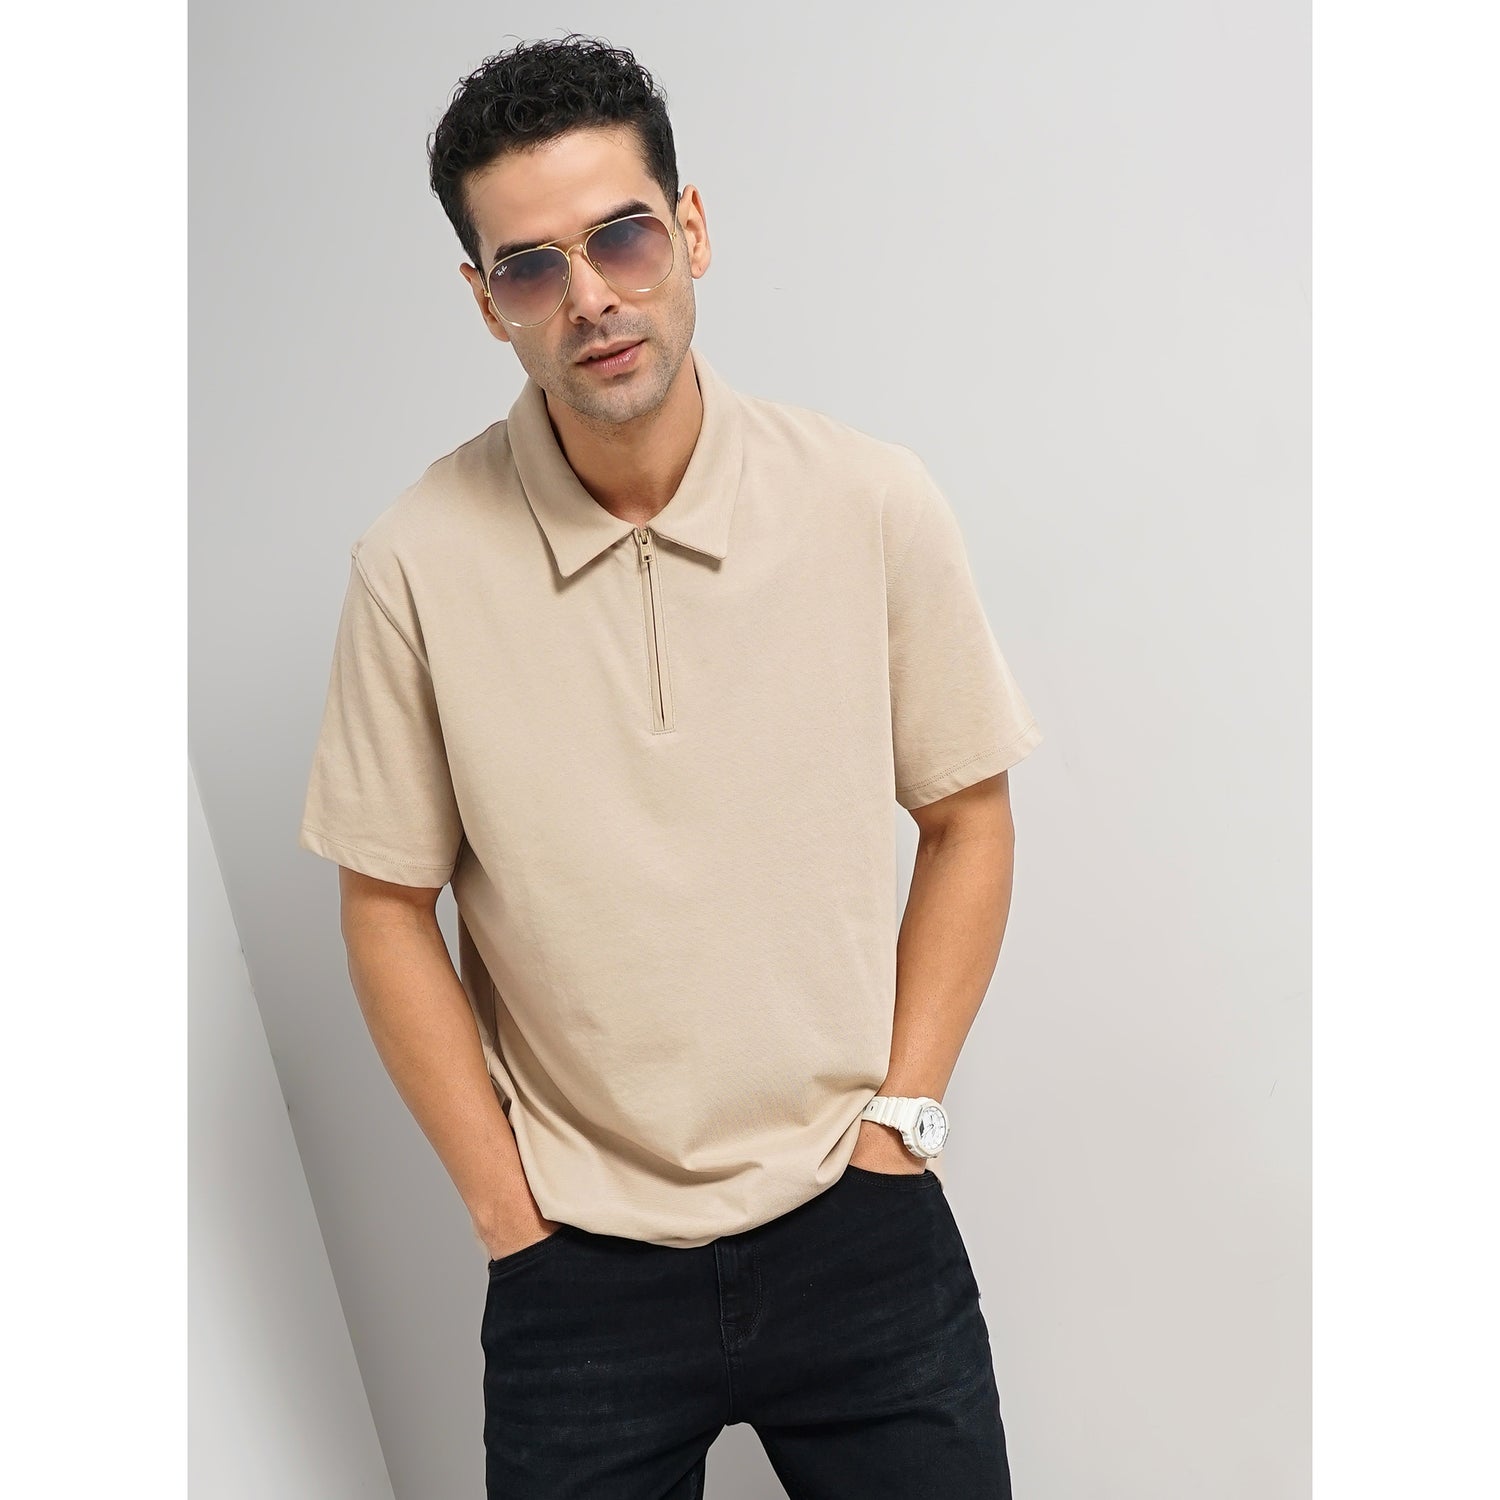 Men's Beige Solid Slim Fit Cotton Tshirts (GEREGUL)